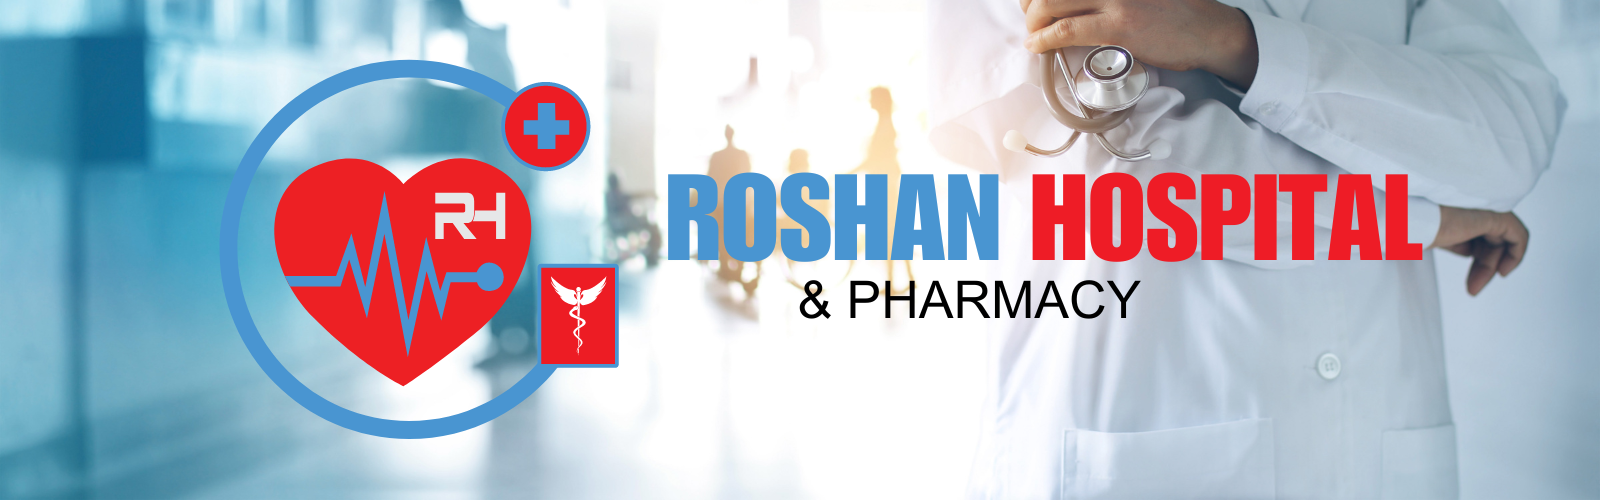 Roshan Hospital & Pharmacy